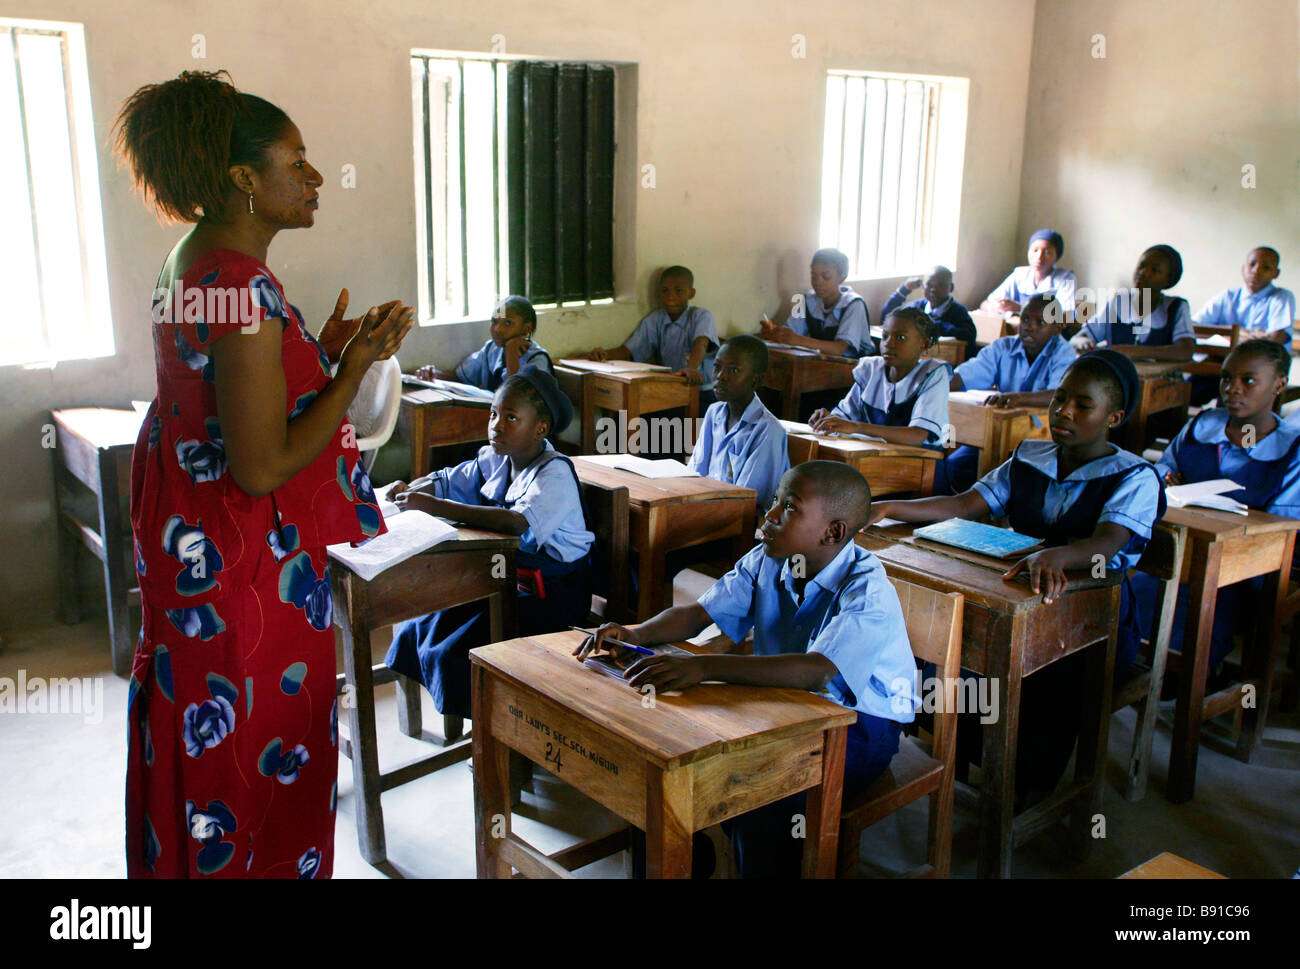 nigeria-classroom-of-a-secondary-school-in-maiduguri-B91C96.jpg